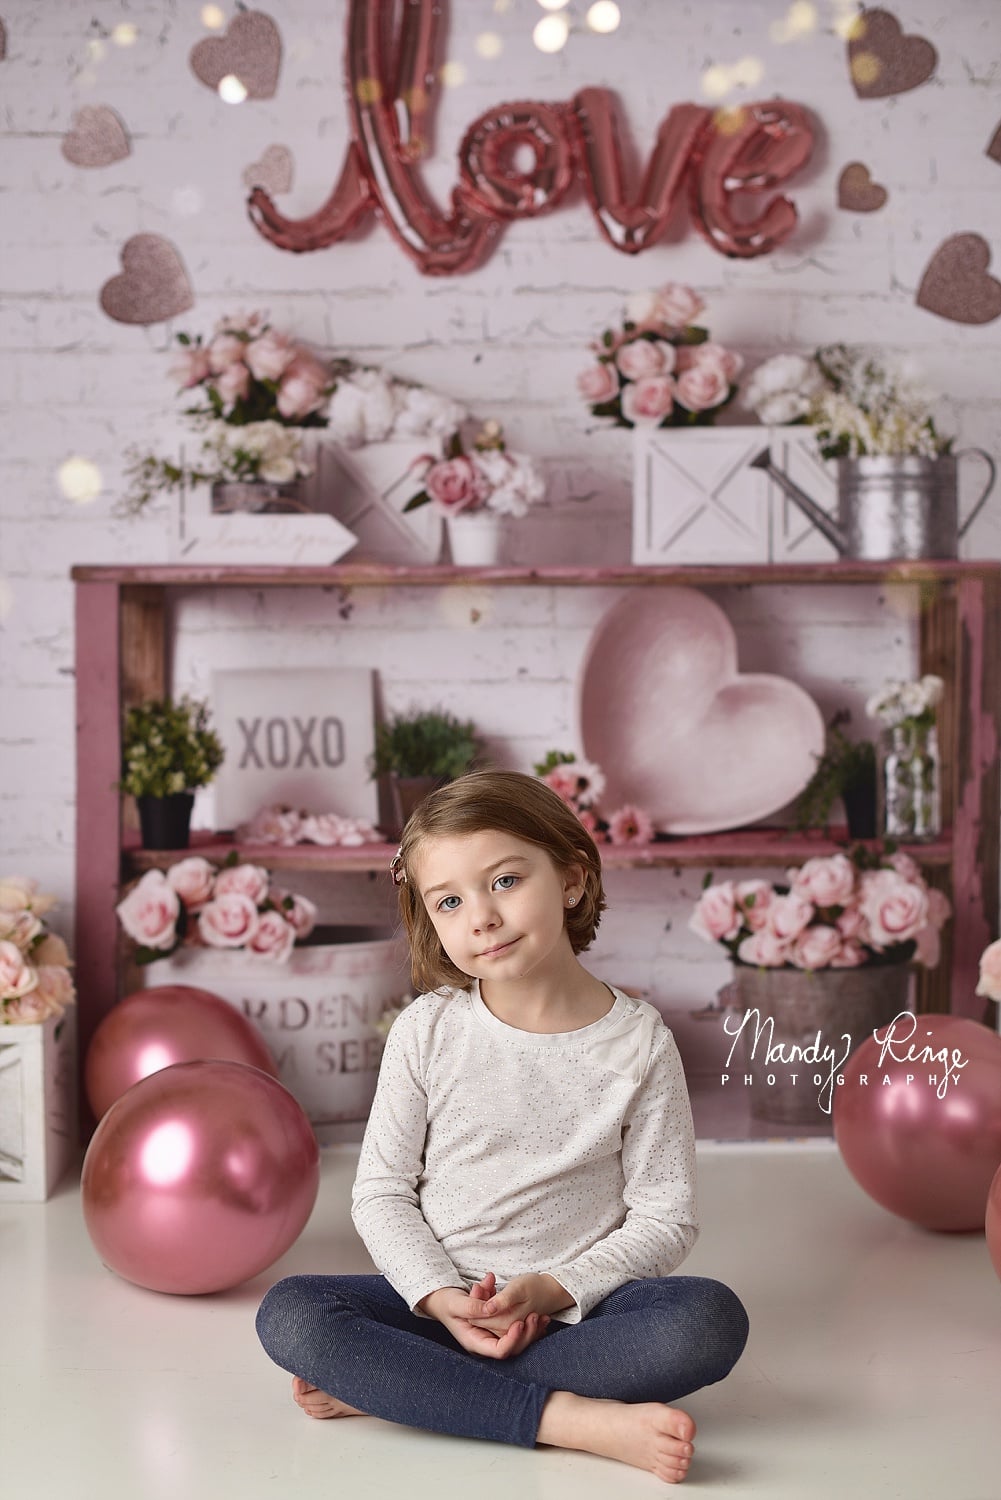 Kate Valentine's Day/Spring Rose Backdrop Designed by Mandy Ringe Photography